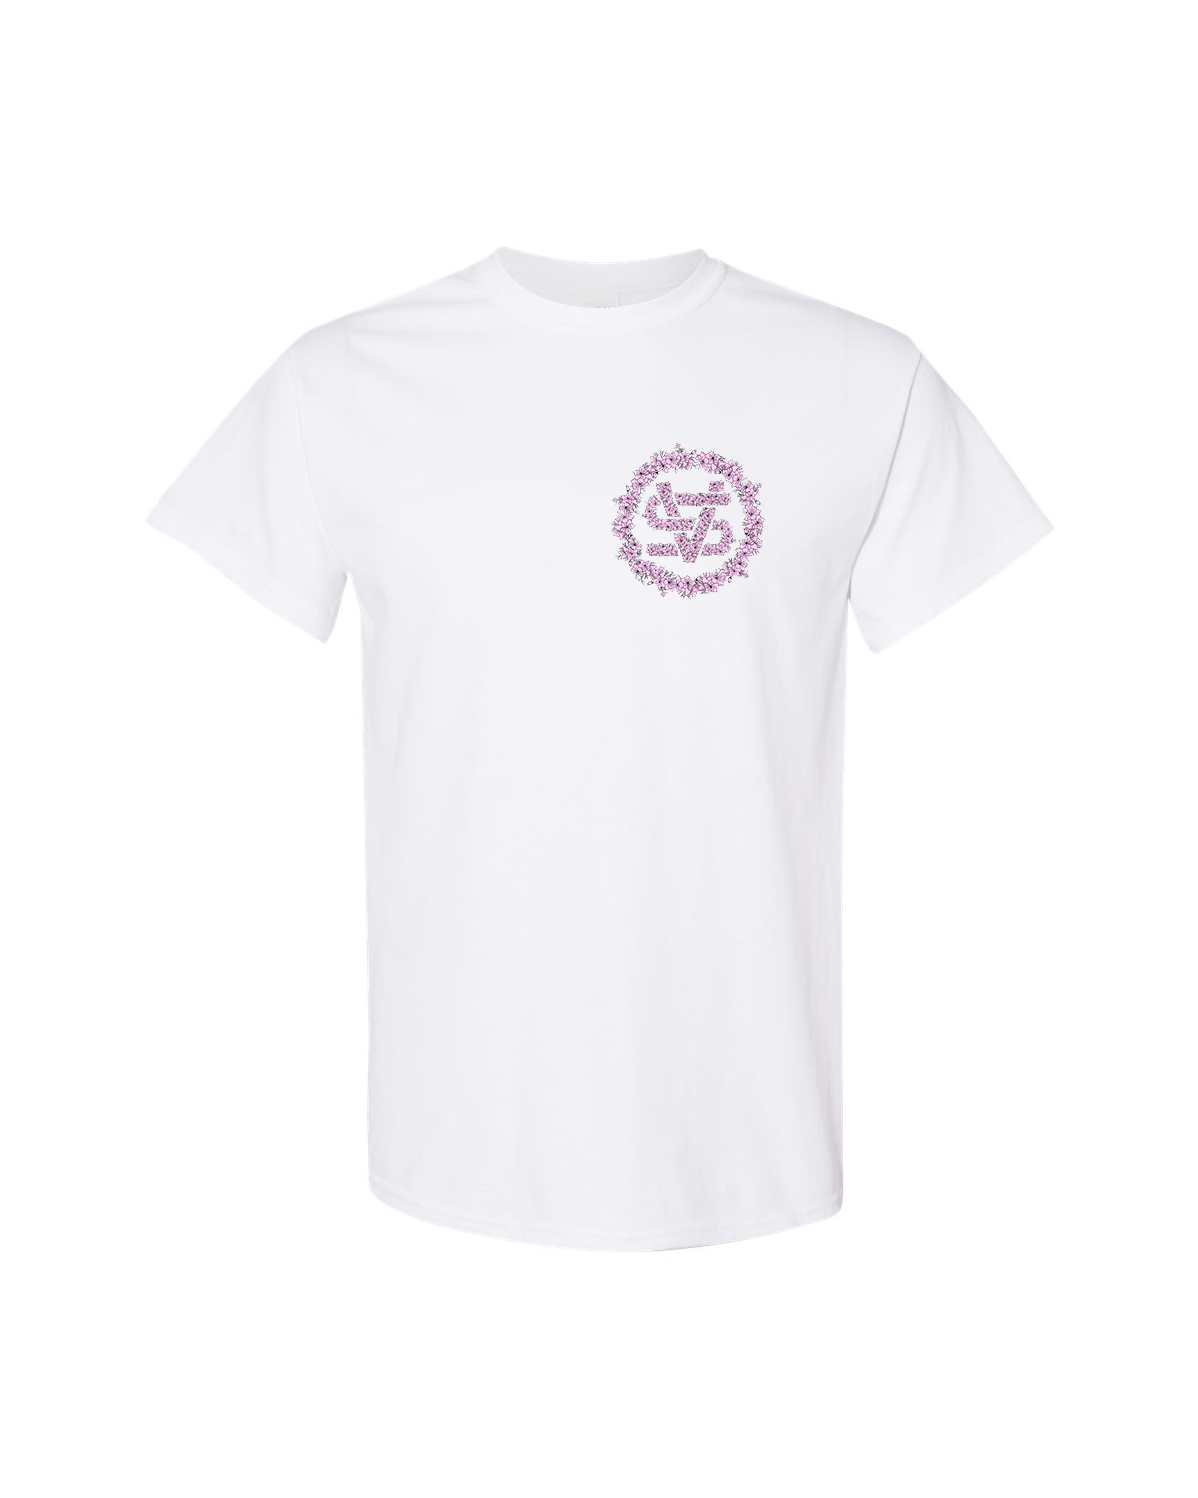 Vine Street - White/Pink T-Shirt